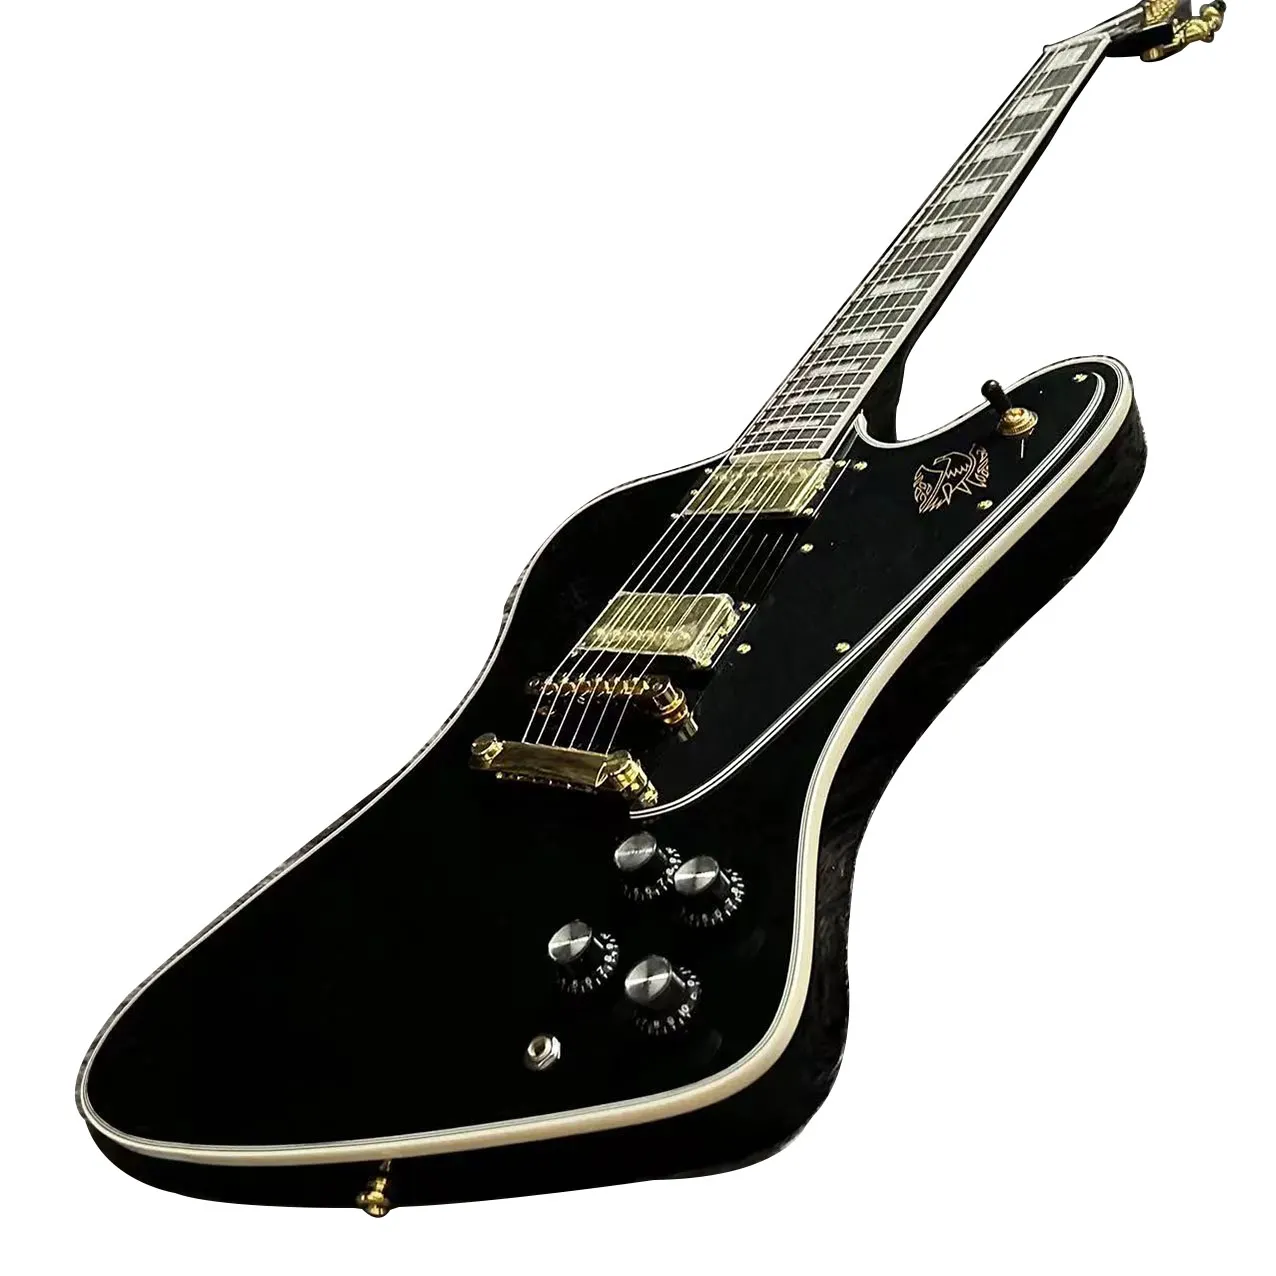 Firebird-Gitarre, schwarze Farbe, Mahagoni-Korpus, Palisander-Griffbrett, goldene Hardware, Tune O Matic-Brücke, kostenloser Versand